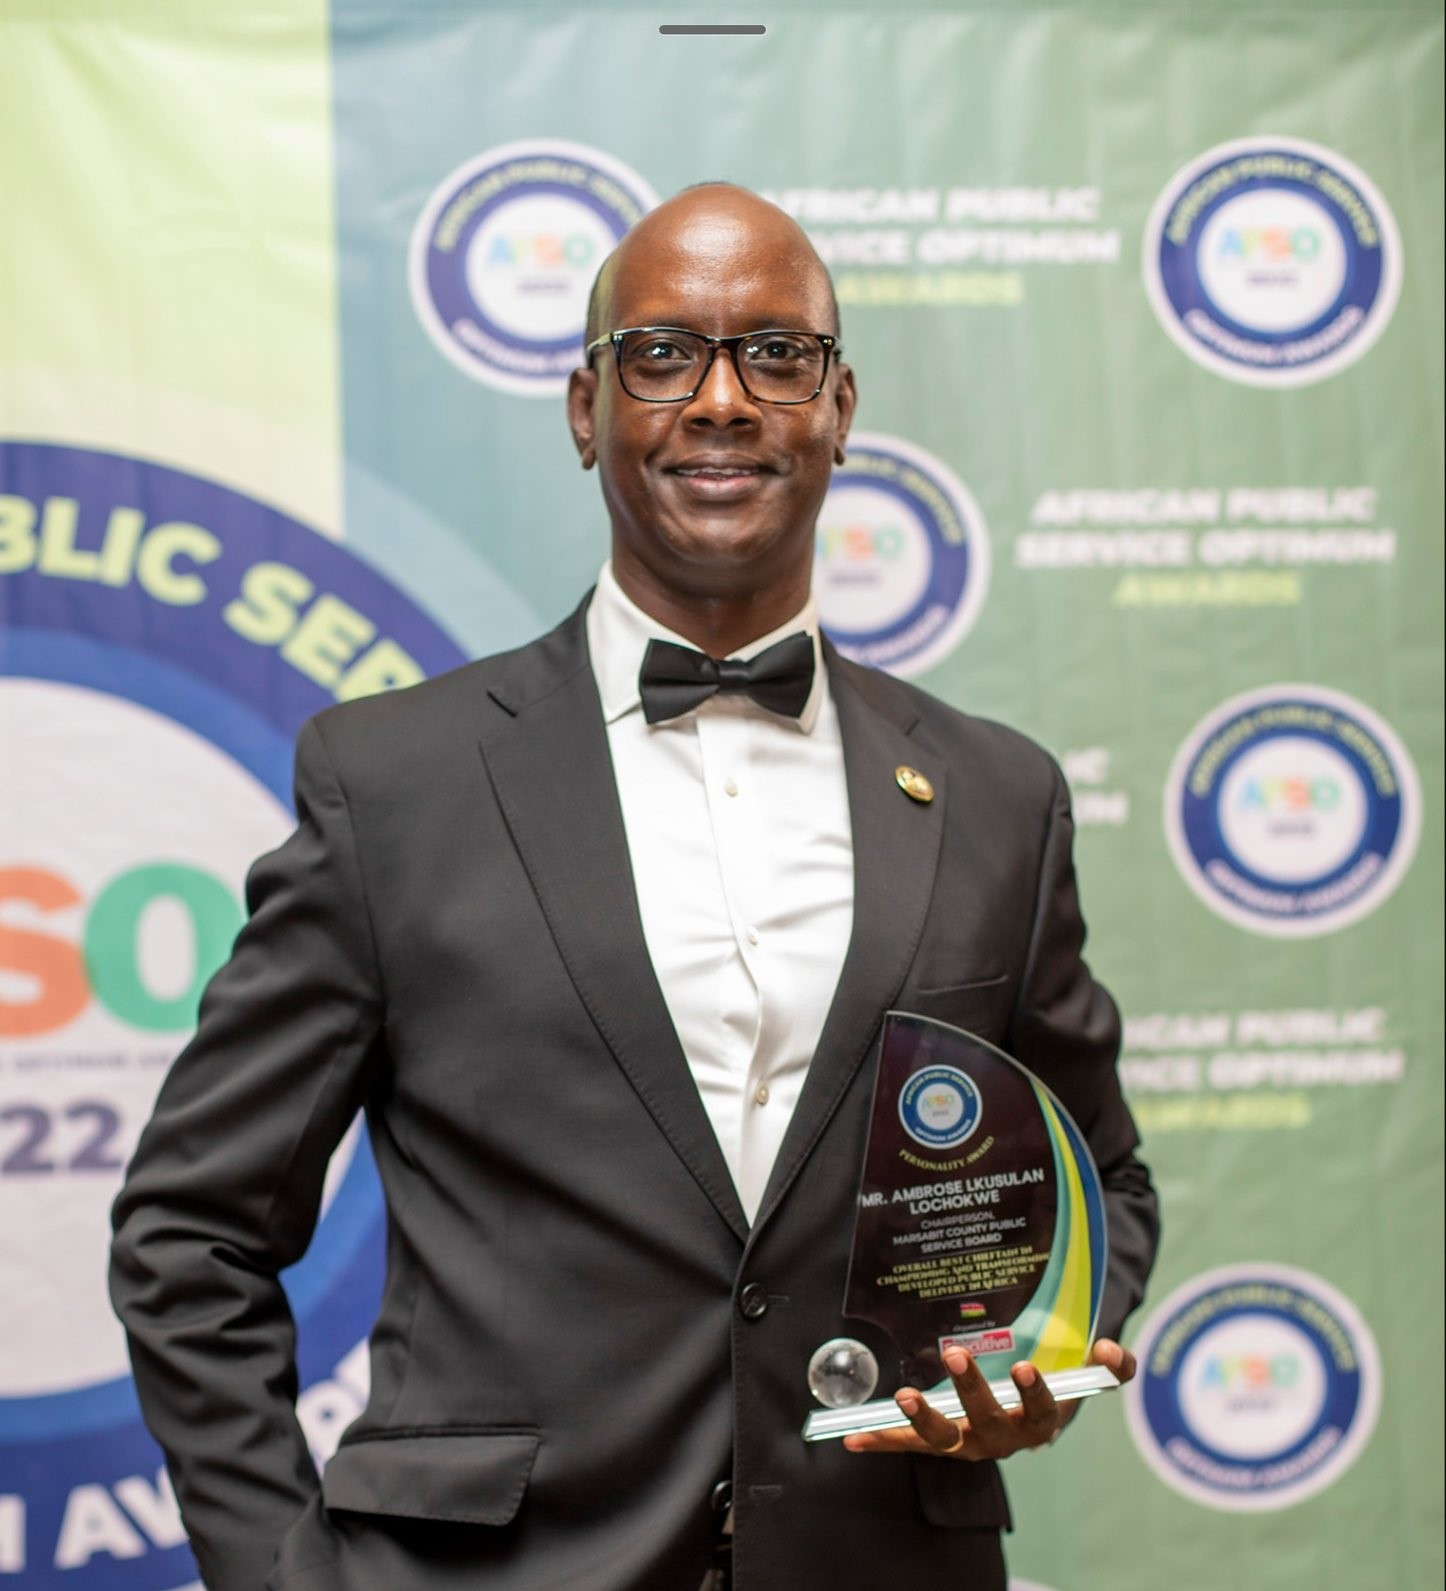 Marsabit County officer scoops prestigious African governance award